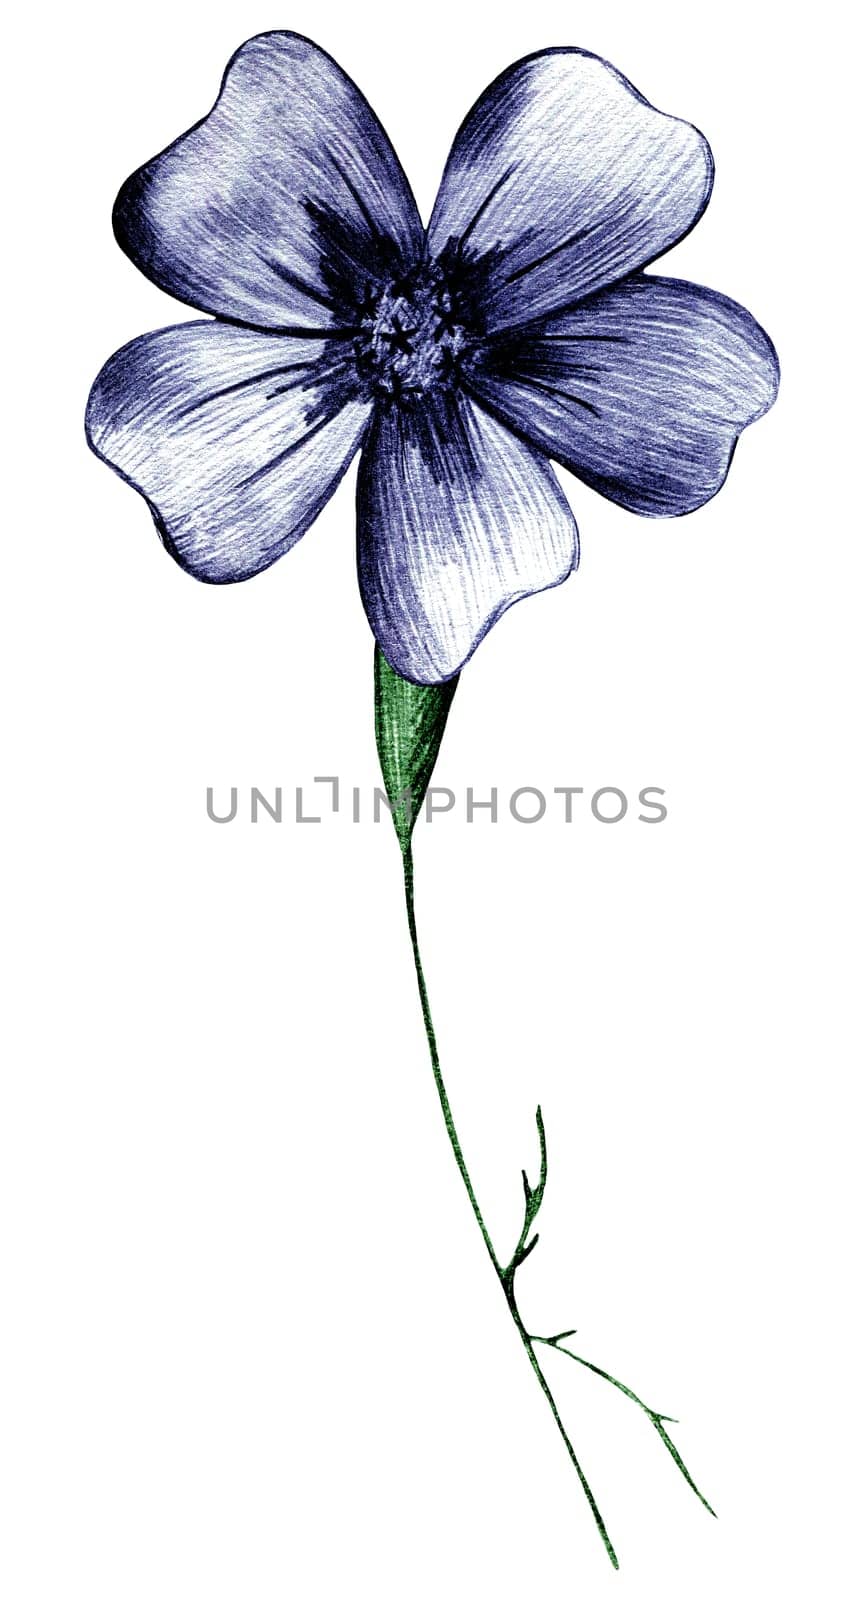 Blue Hand Drawn Marigold Flower Isolated on White Background. by Rina_Dozornaya